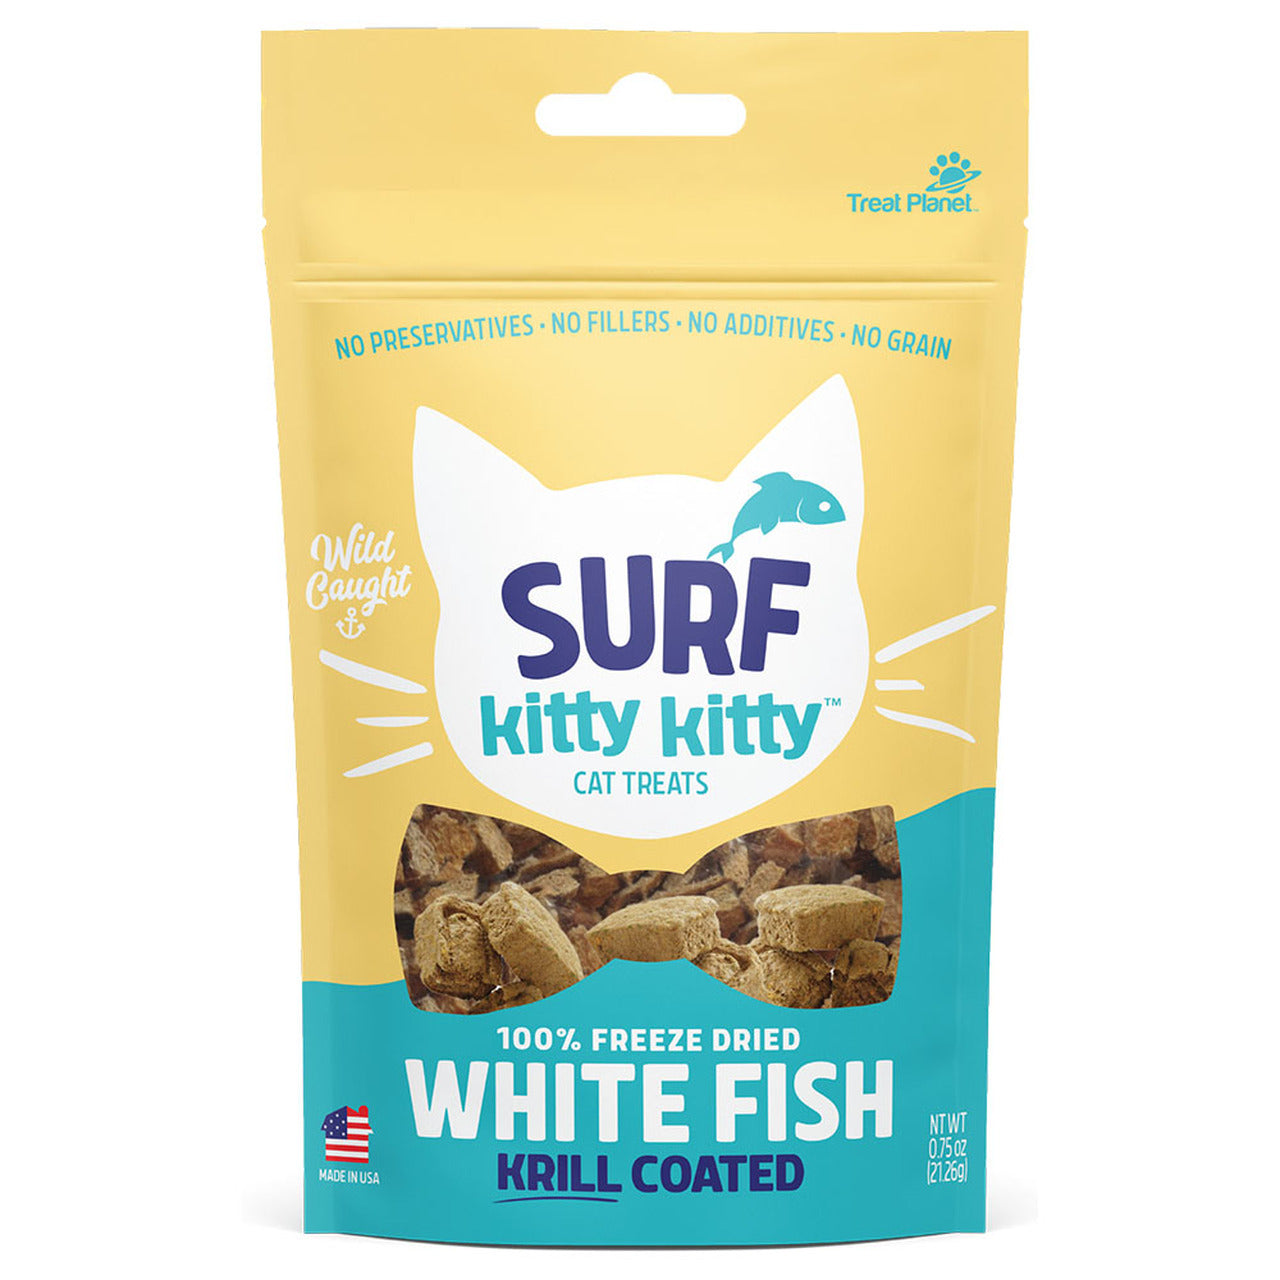 Kitty Kitty Cat Treats - SURF 100% Freeze Dried White Fish Treats With Krill Coating 0.6oz